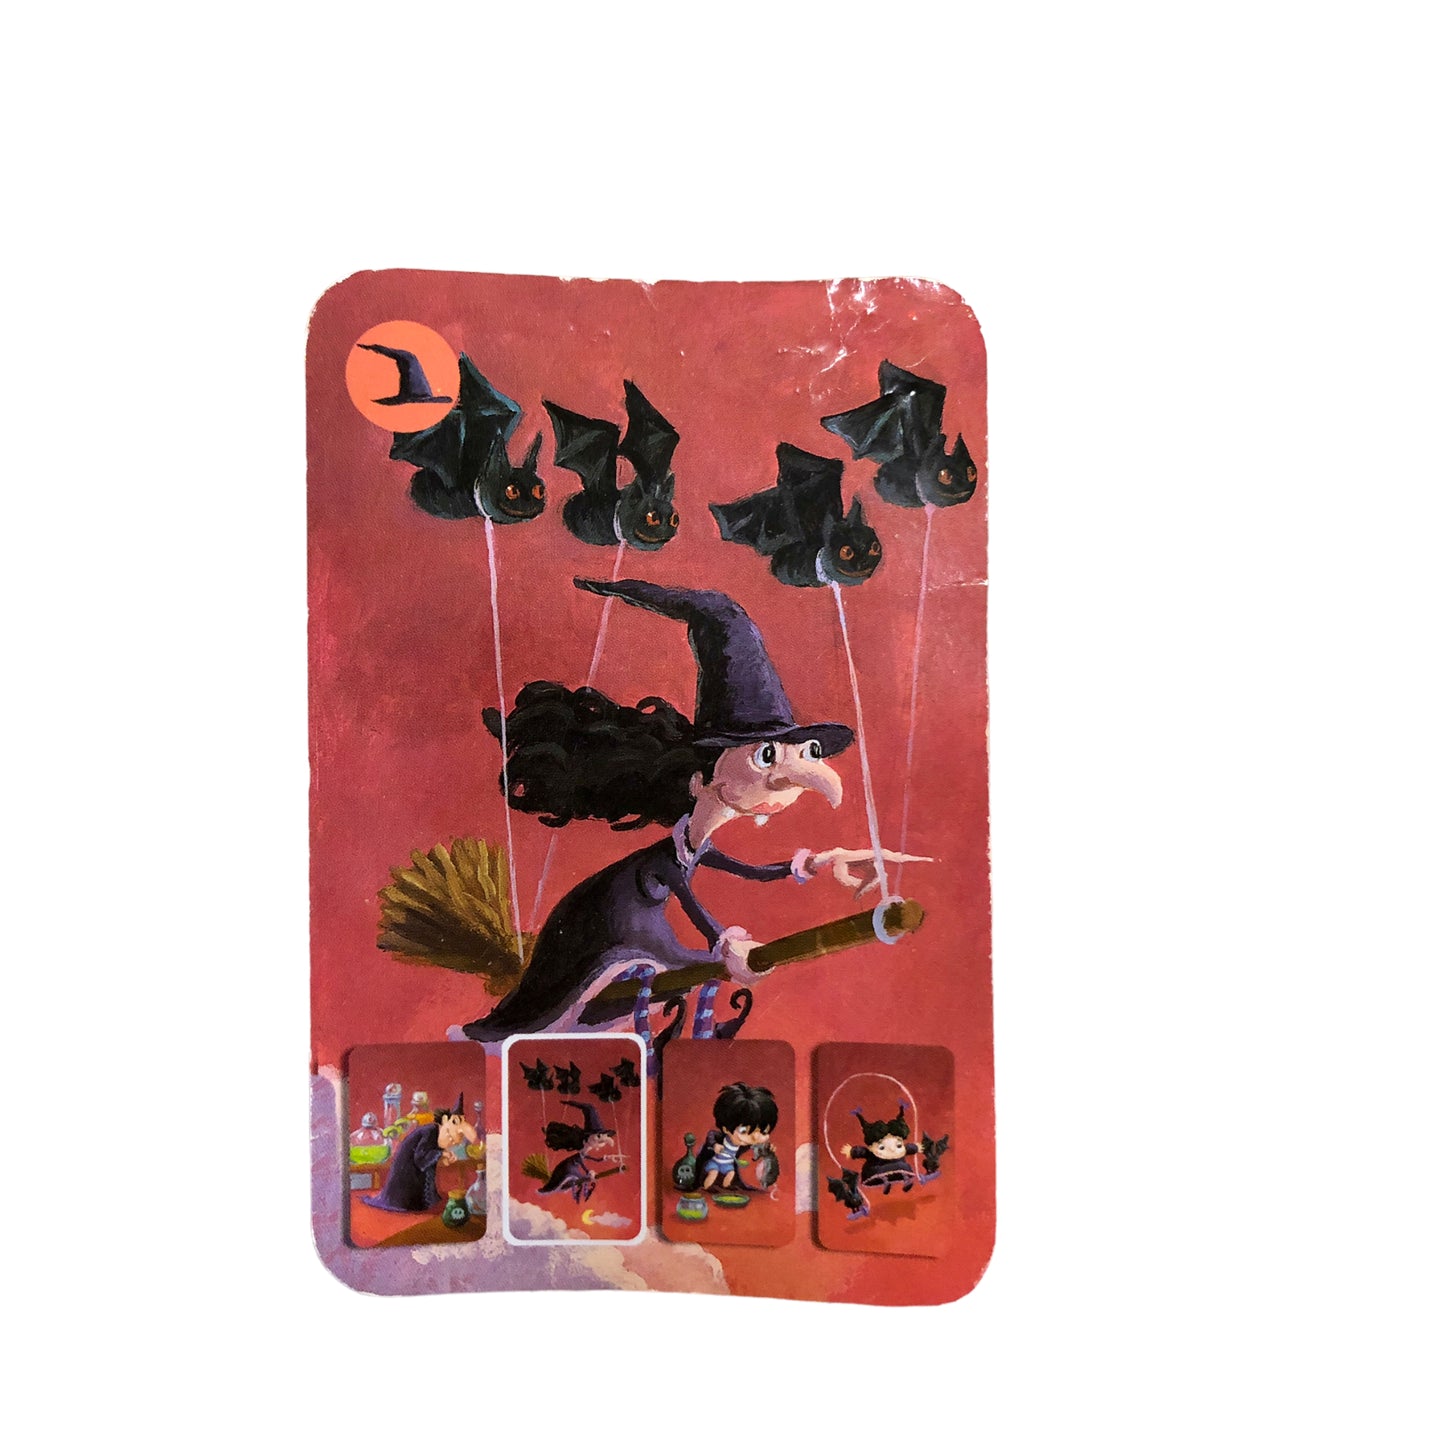 Djeco - Mini Family card game